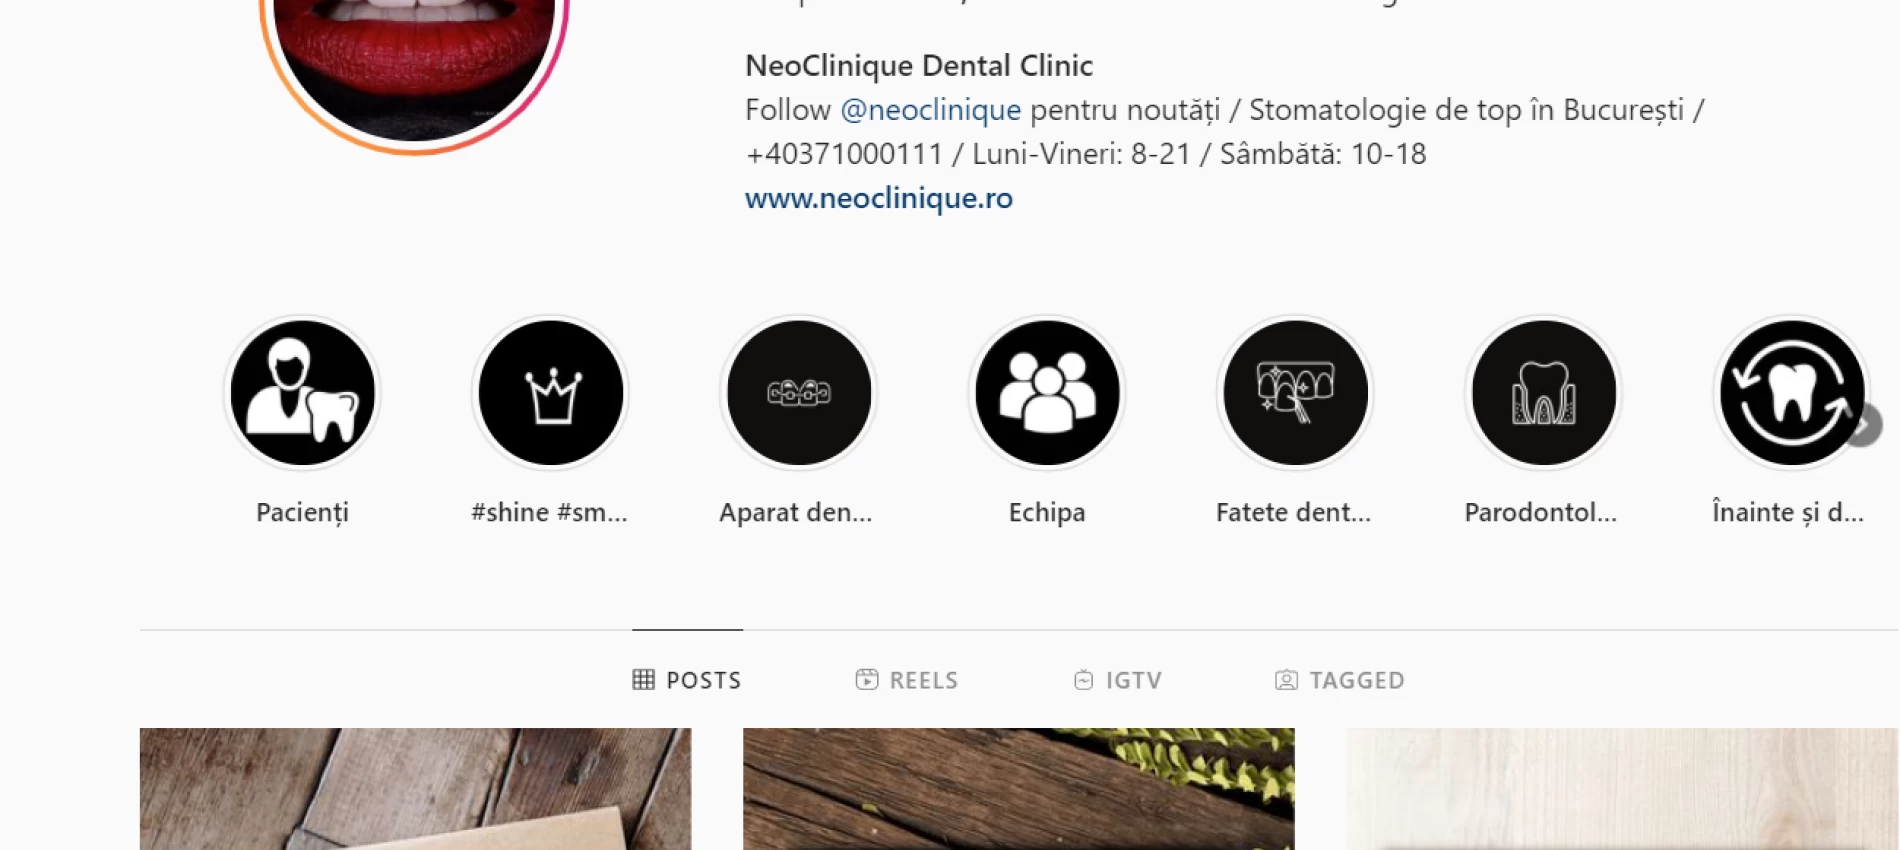 Follow @neoclinique pe Instagram